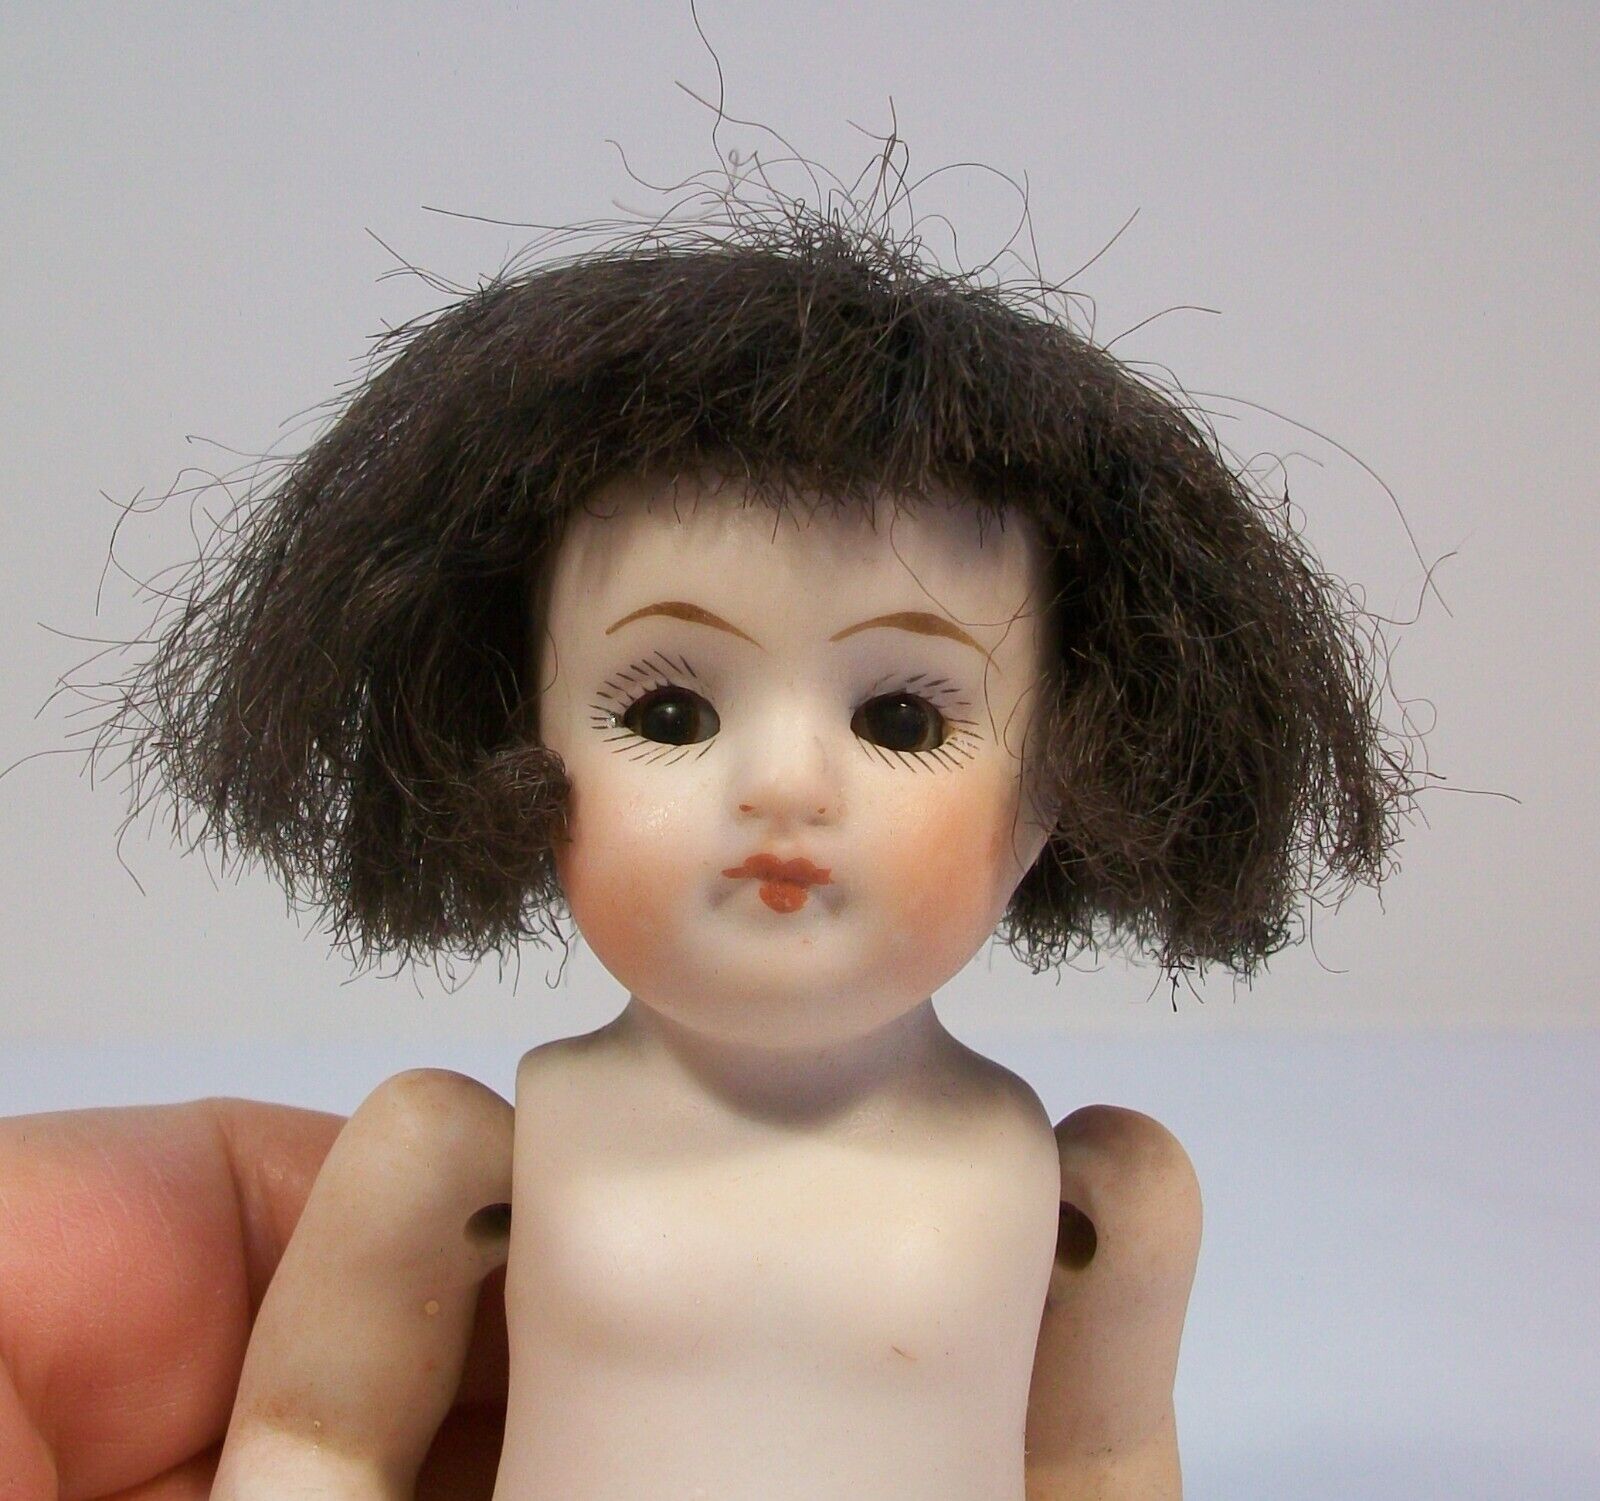 Antique Vintage 51 834 Miniature Bisque Sleep Eye Articulated Doll As Found Antique Price